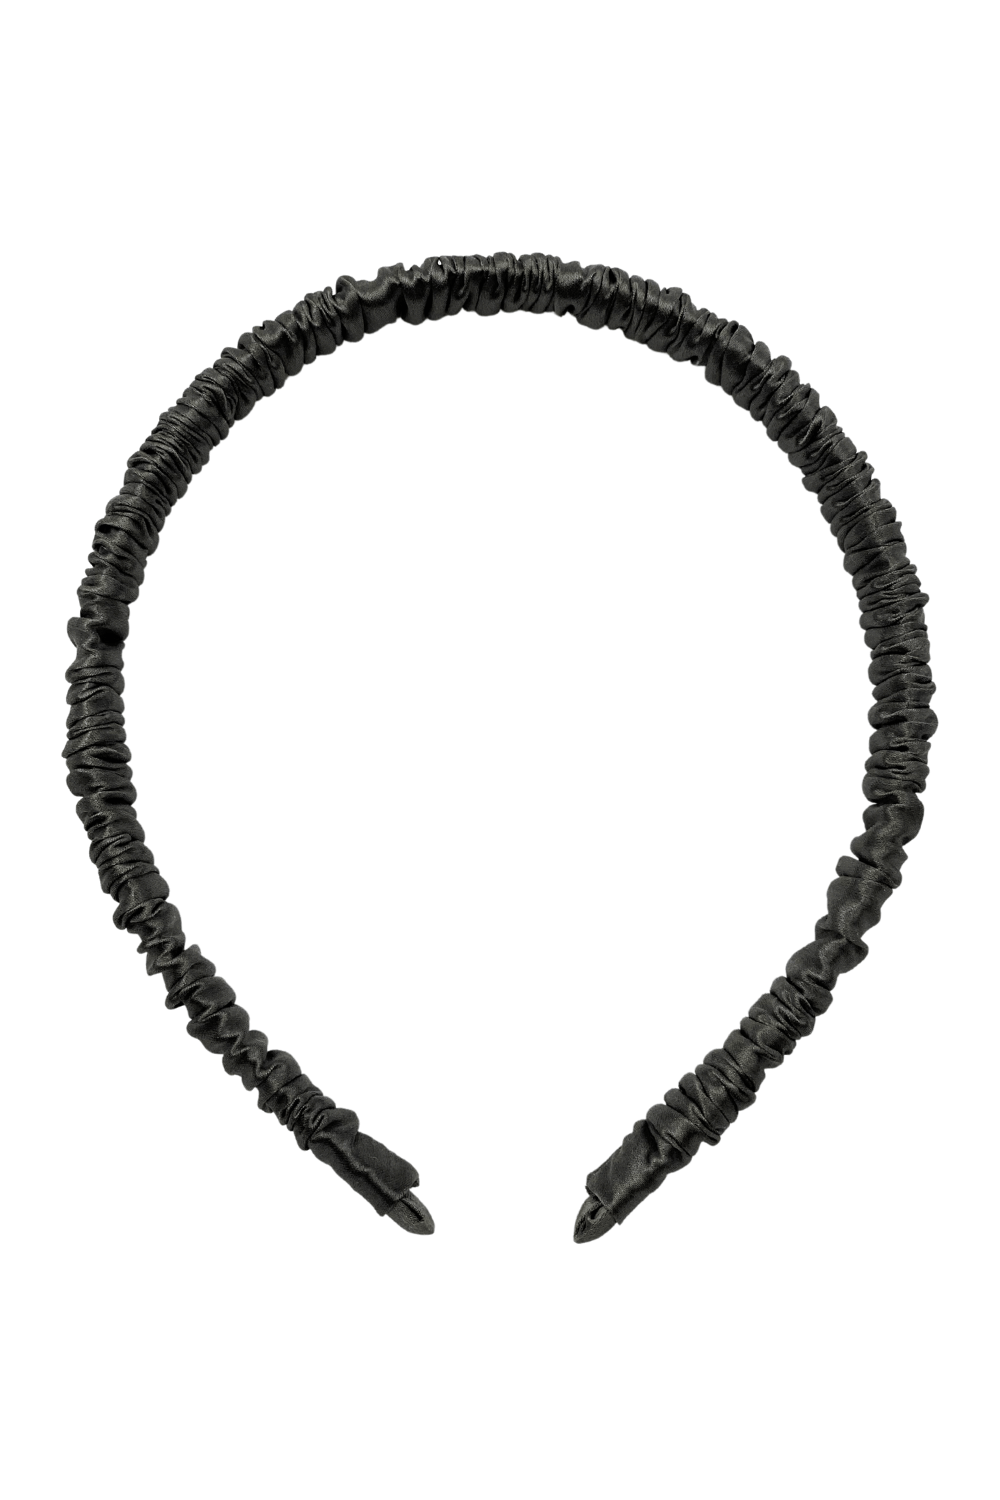 Silk Hairband (Thin) - Charcoal Grey - BASK™